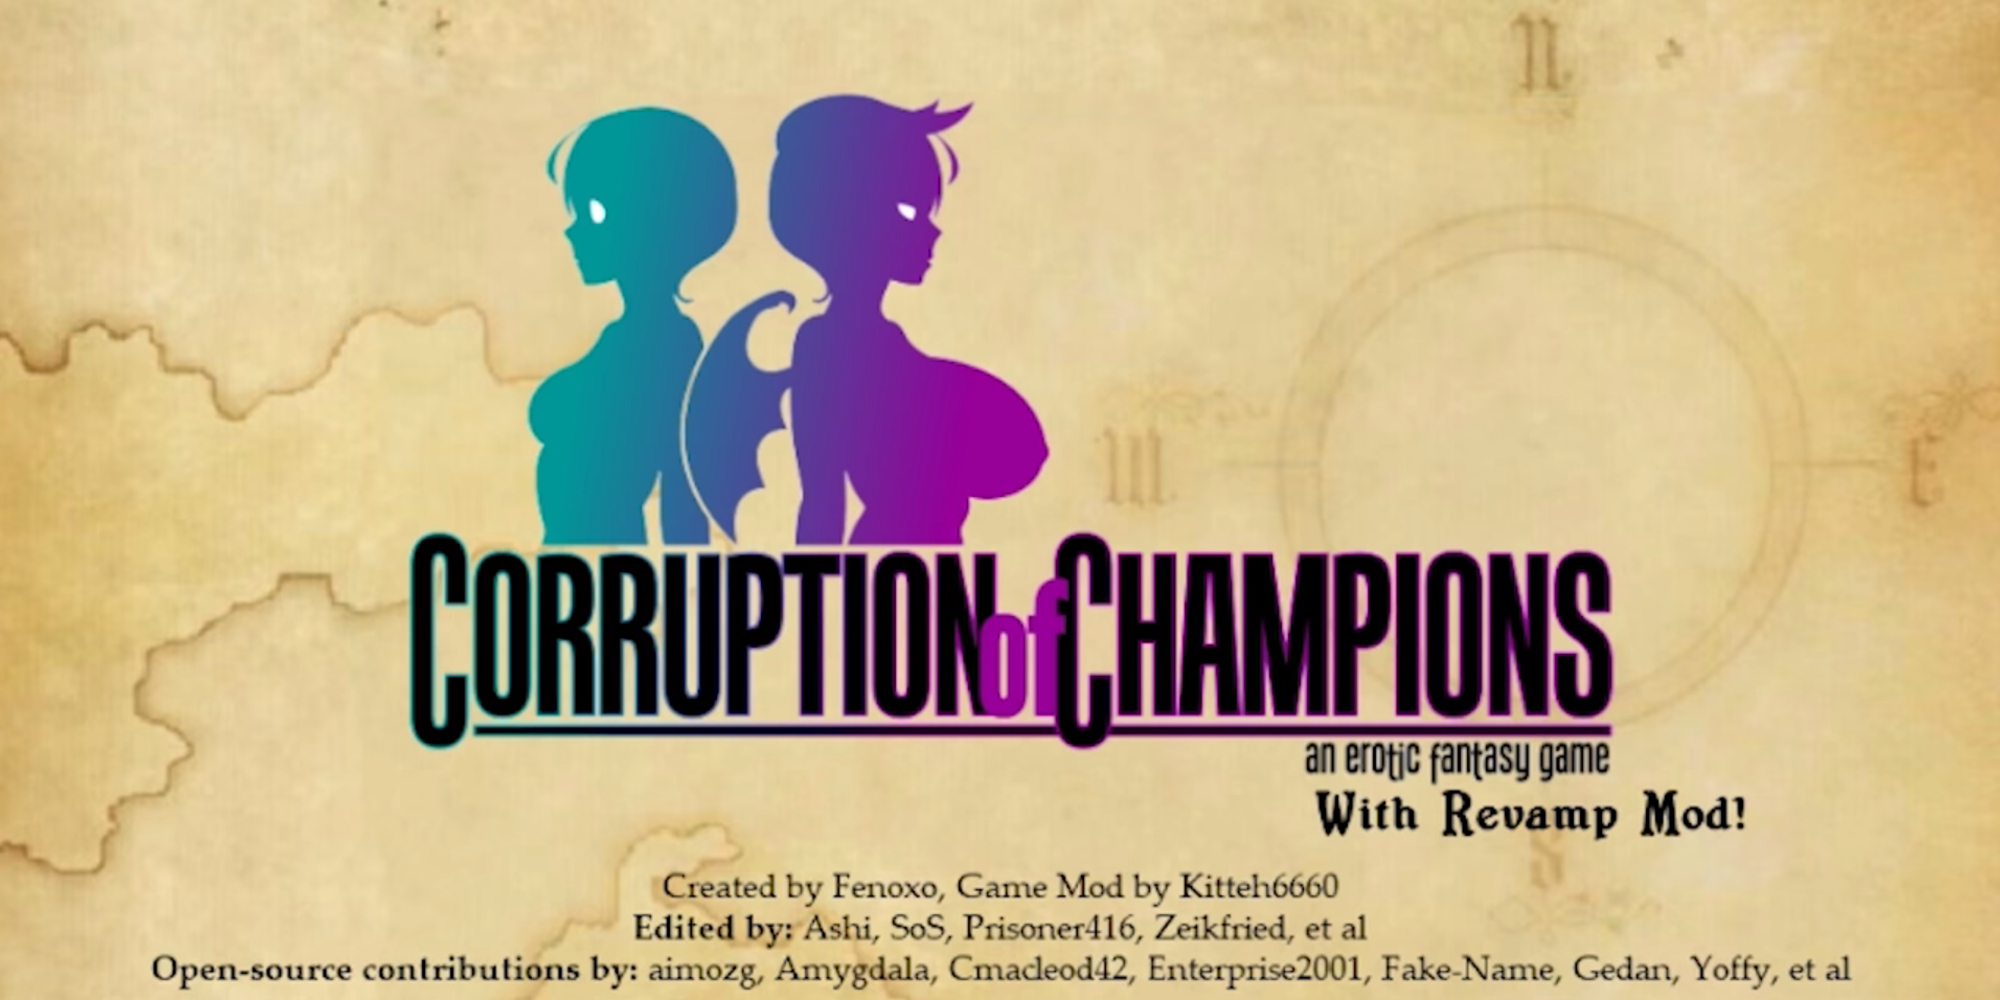 corruption of champions revamp mod wiki